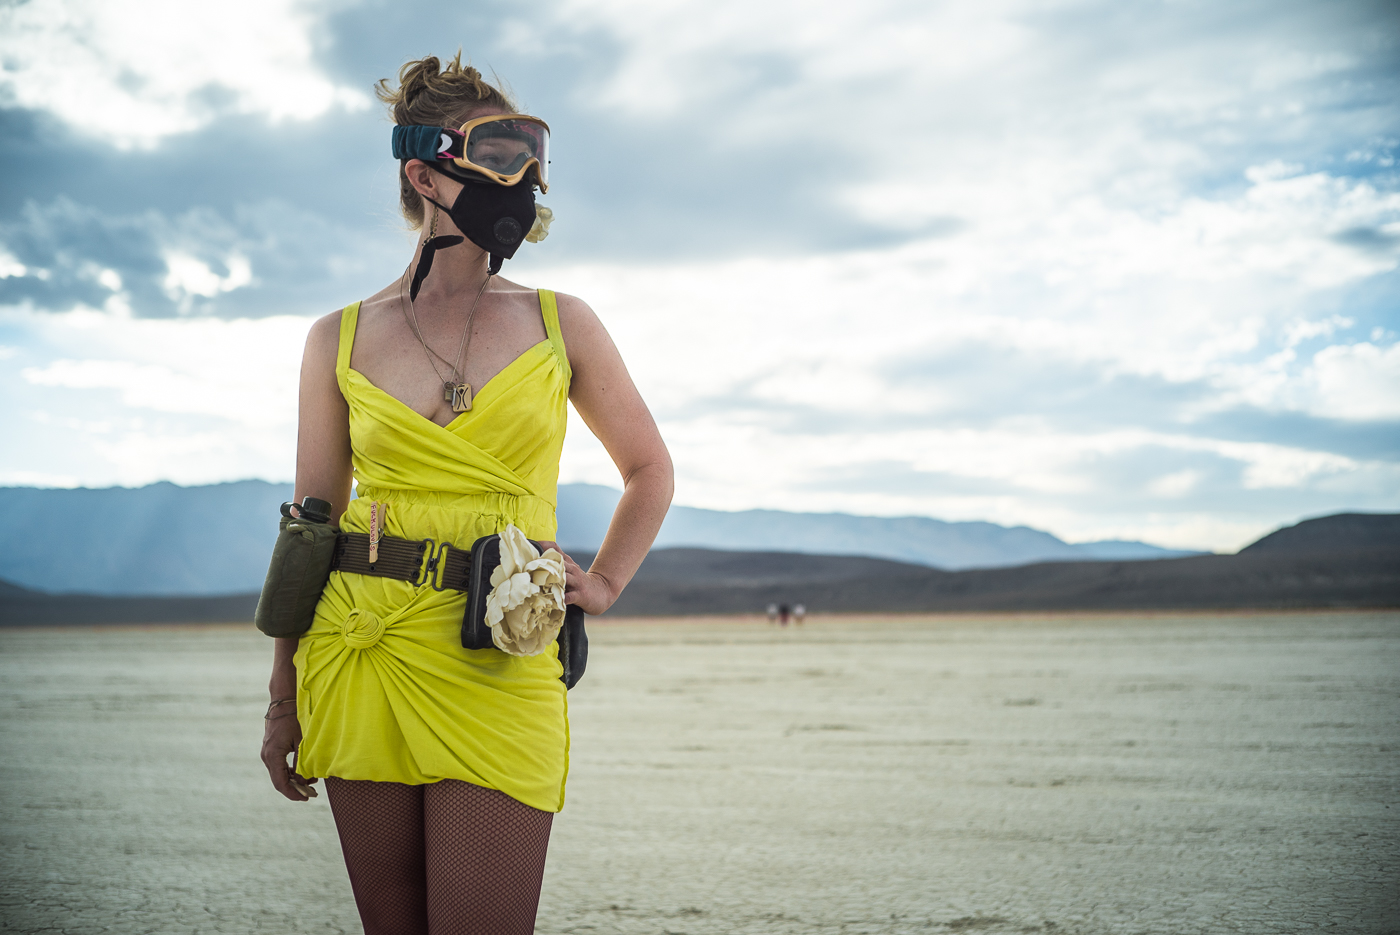 Burning Man 2014 women's costume sunset playa portrait